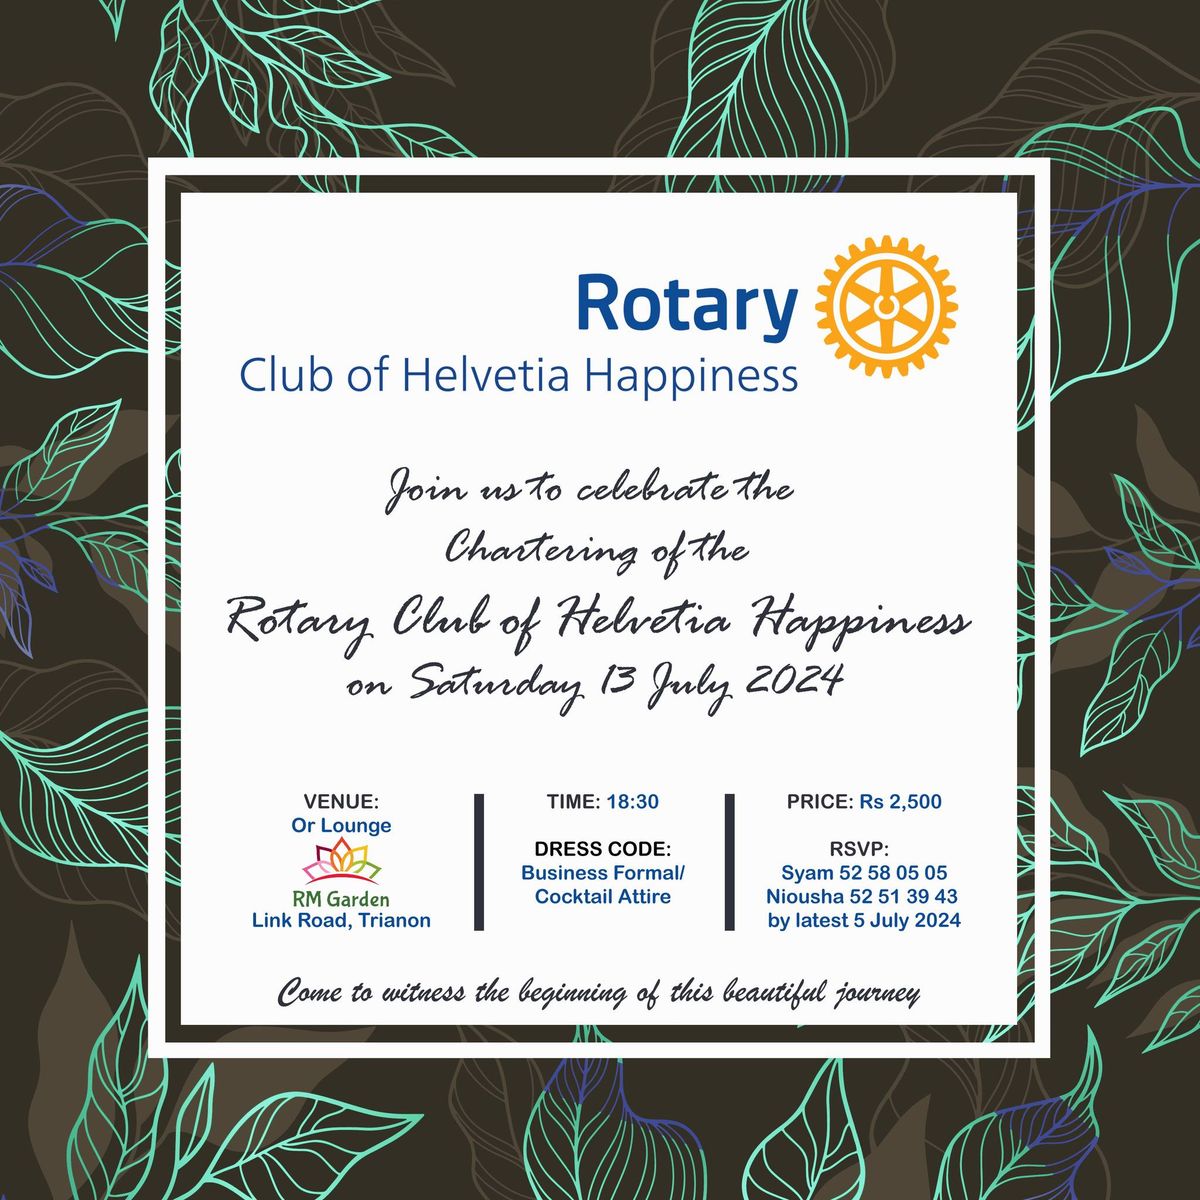 Rotary Club of Helvetia Happiness Charter Night